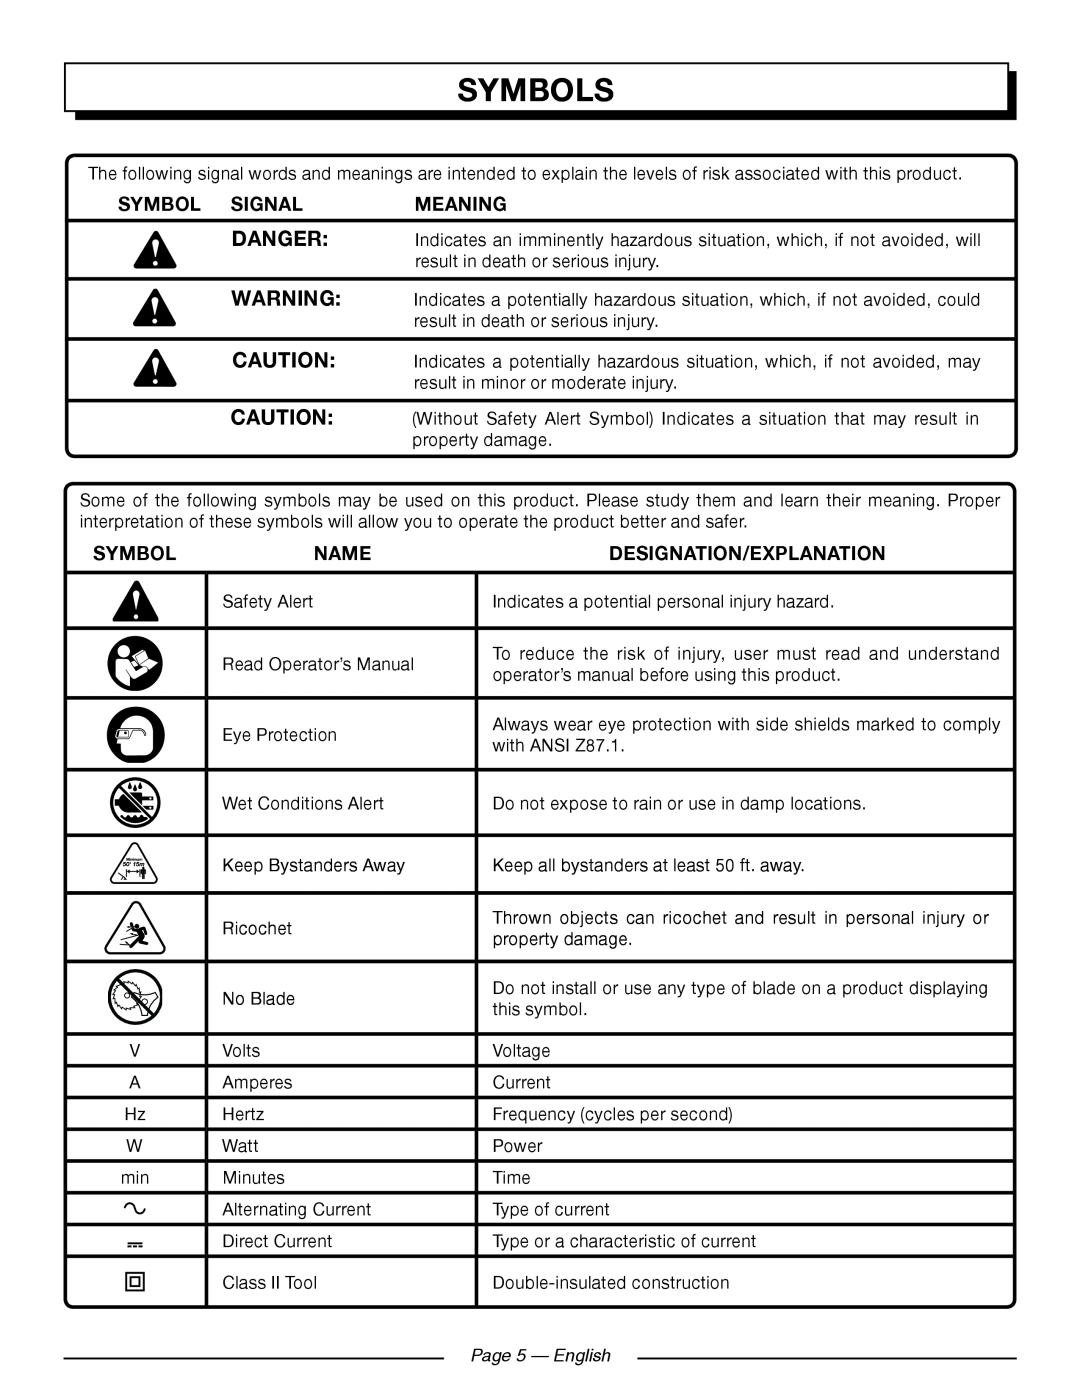 Homelite UT41121 Symbols, Danger, Symbol Signal, Meaning, Name, Designation/Explanation, Page 5 - English 